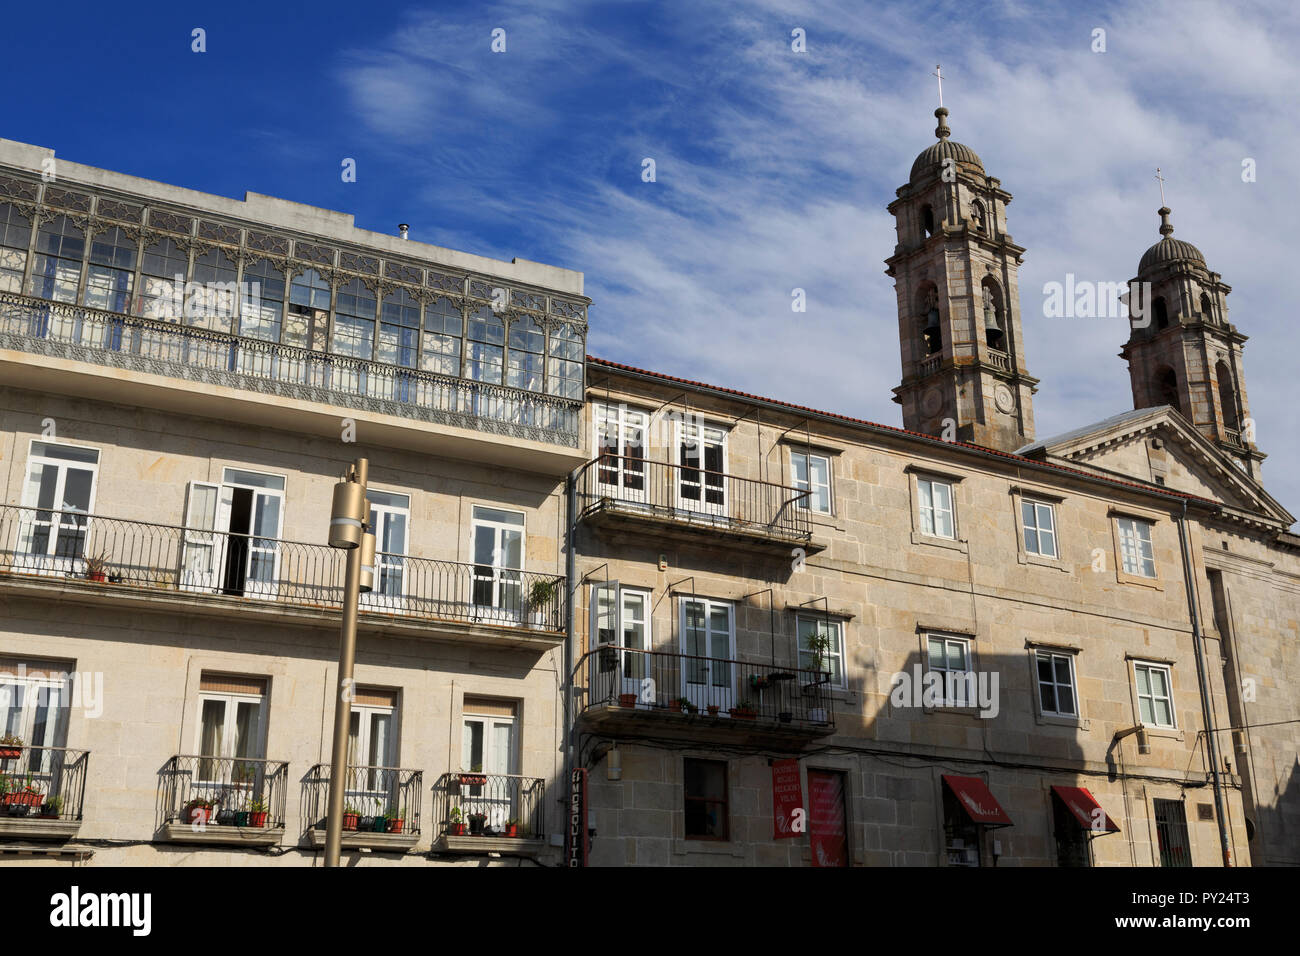 Pedra Square, Old Town Vigo, Galicia, Spain, Europe Stock Photo